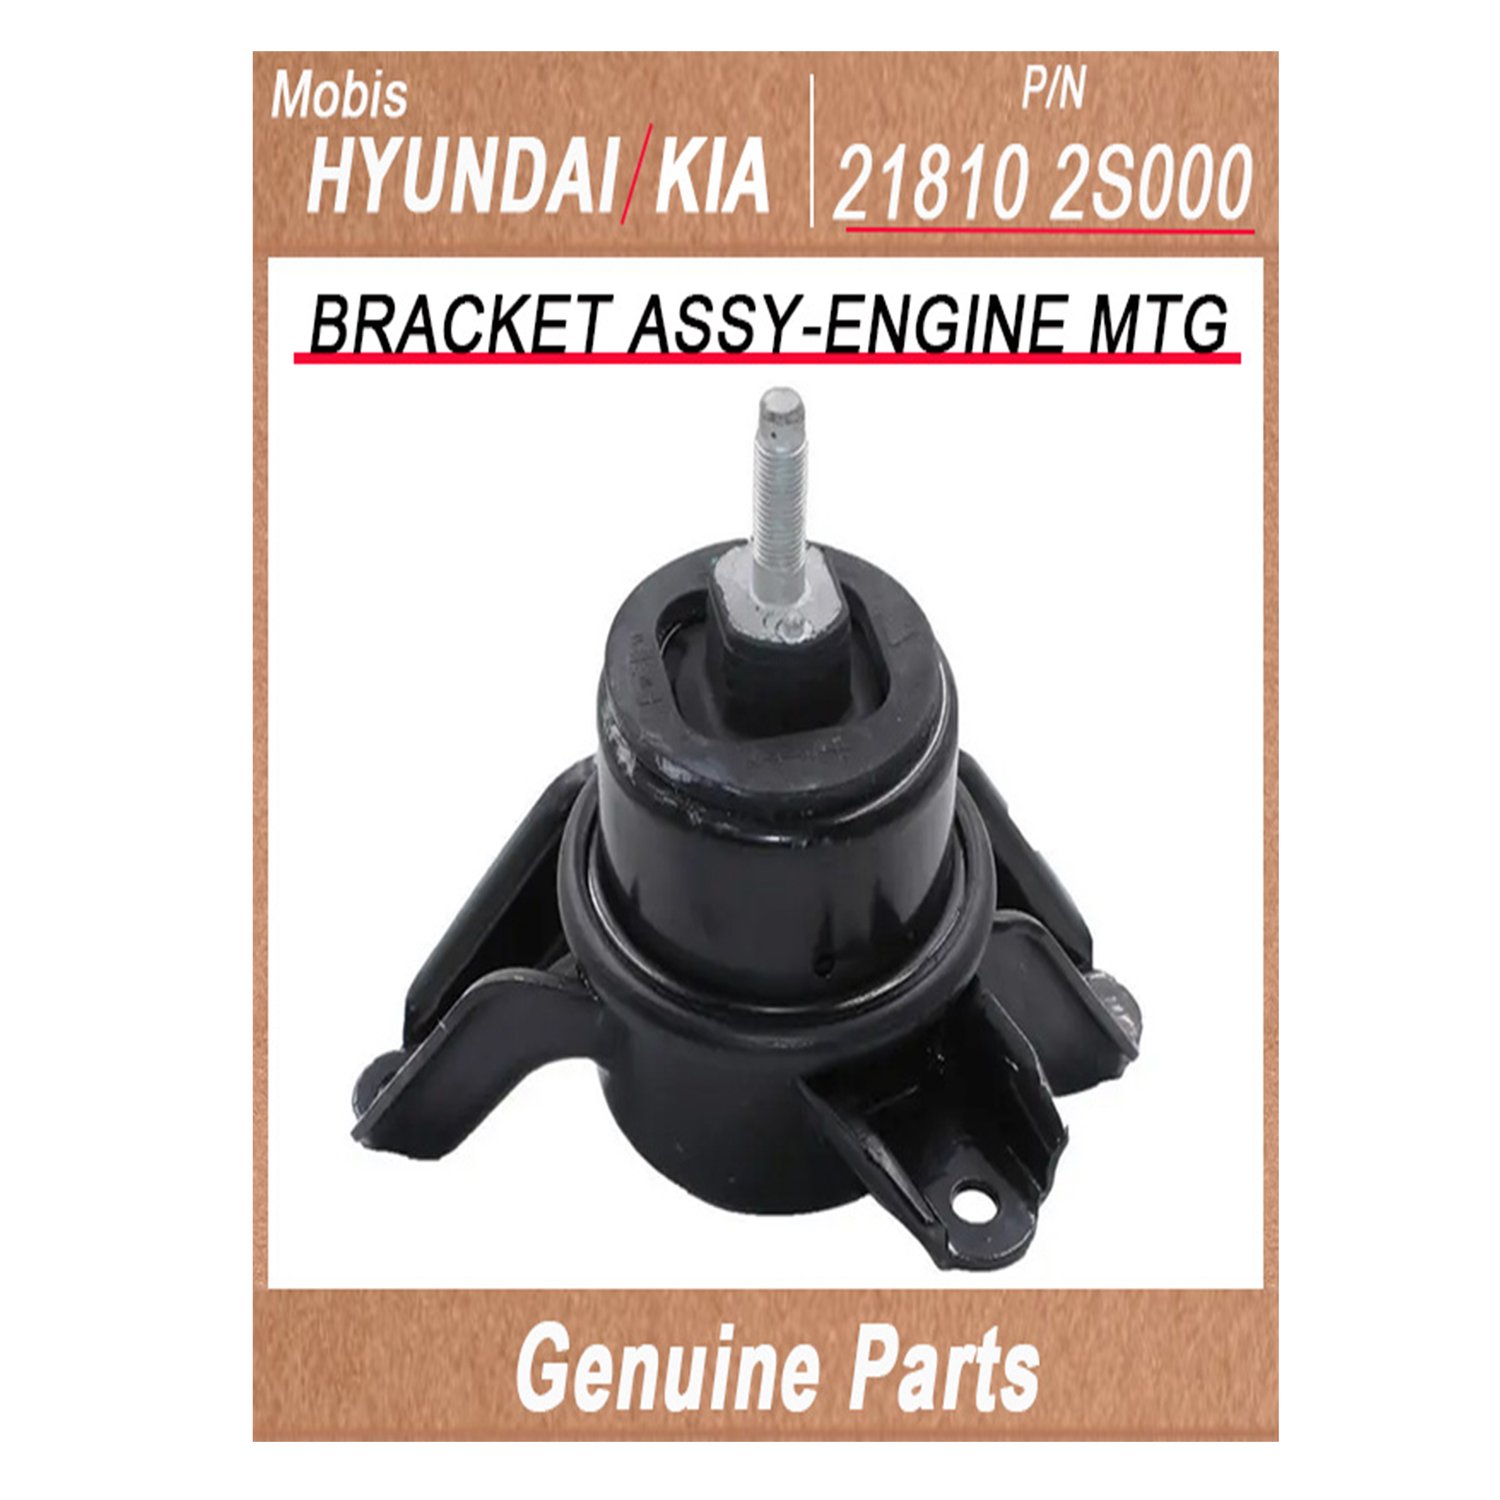 218102S000 _ BRACKET ASSY_ENGINE MTG _ Genuine Korean Automotive Spare Parts _ Hyundai Kia _Mobis_